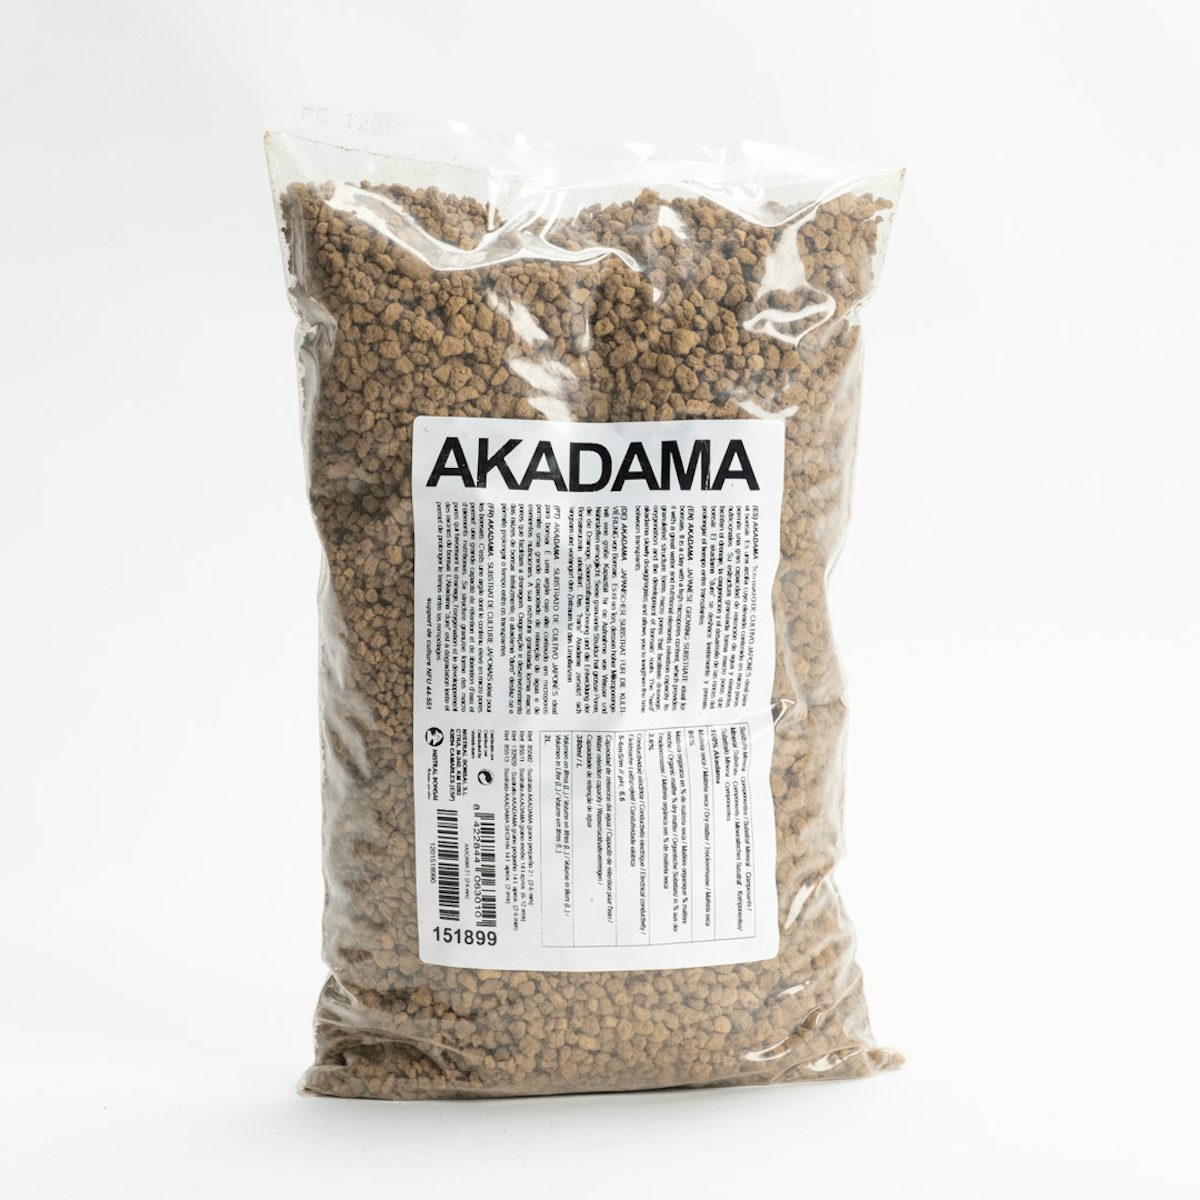 Akadama Bonsai Substrate